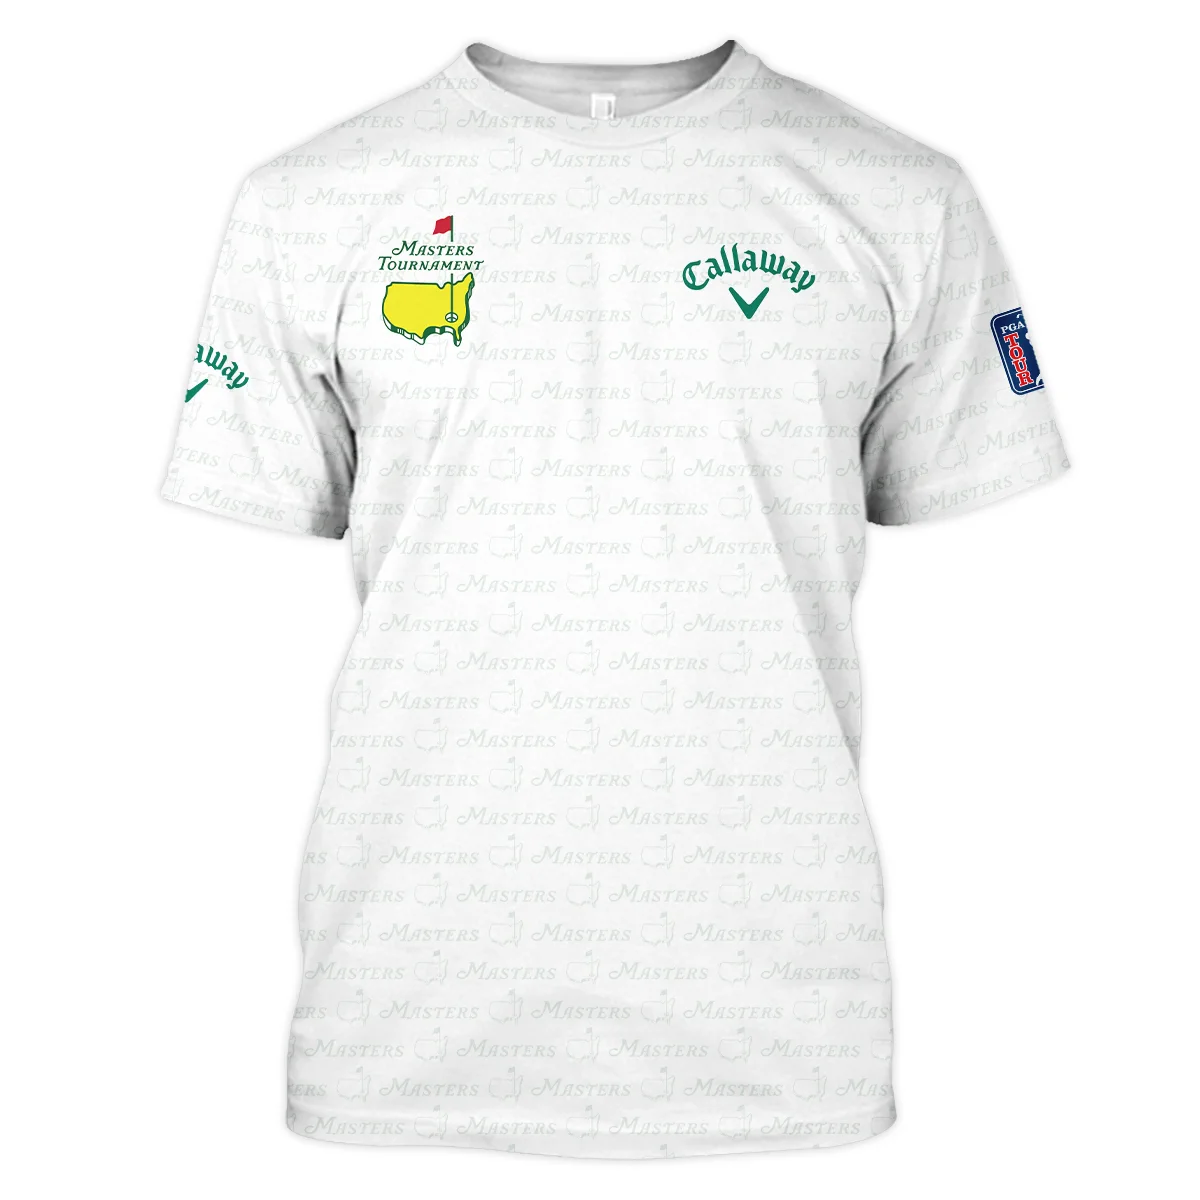 Pattern Masters Tournament Callaway Hoodie Shirt White Green Sport Love Clothing Hoodie Shirt